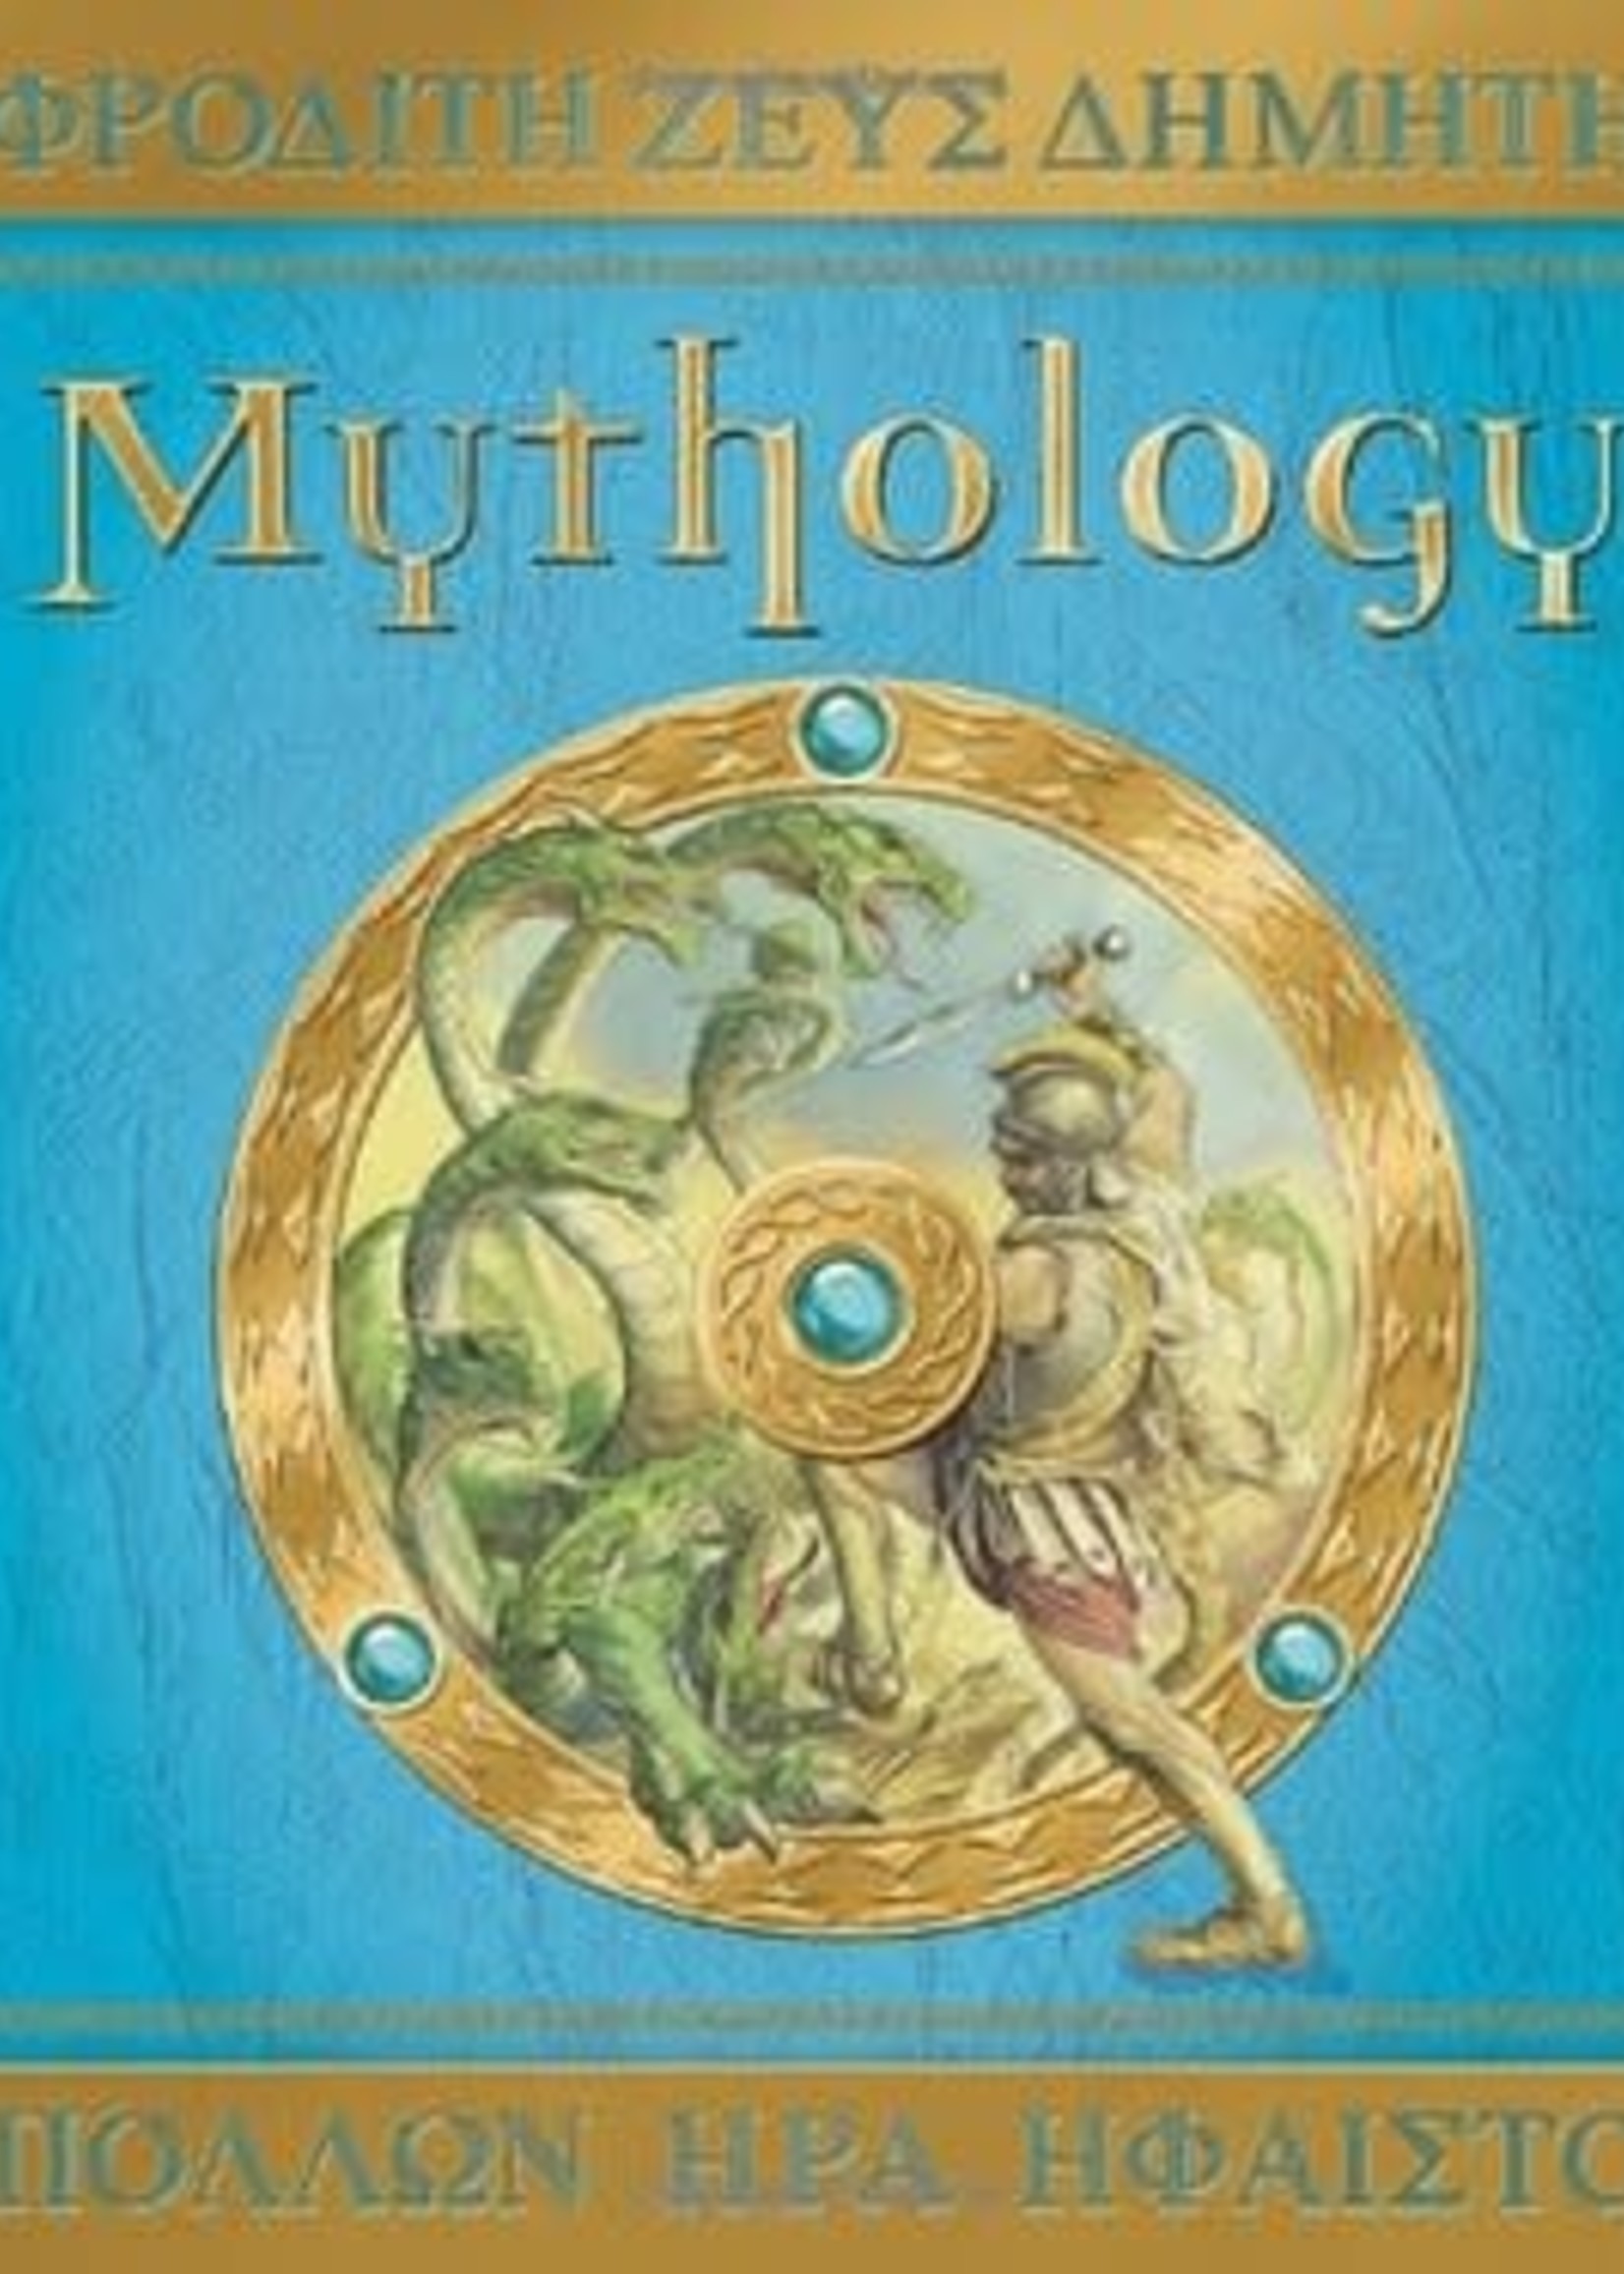 Mythology by Dugald A. Steer